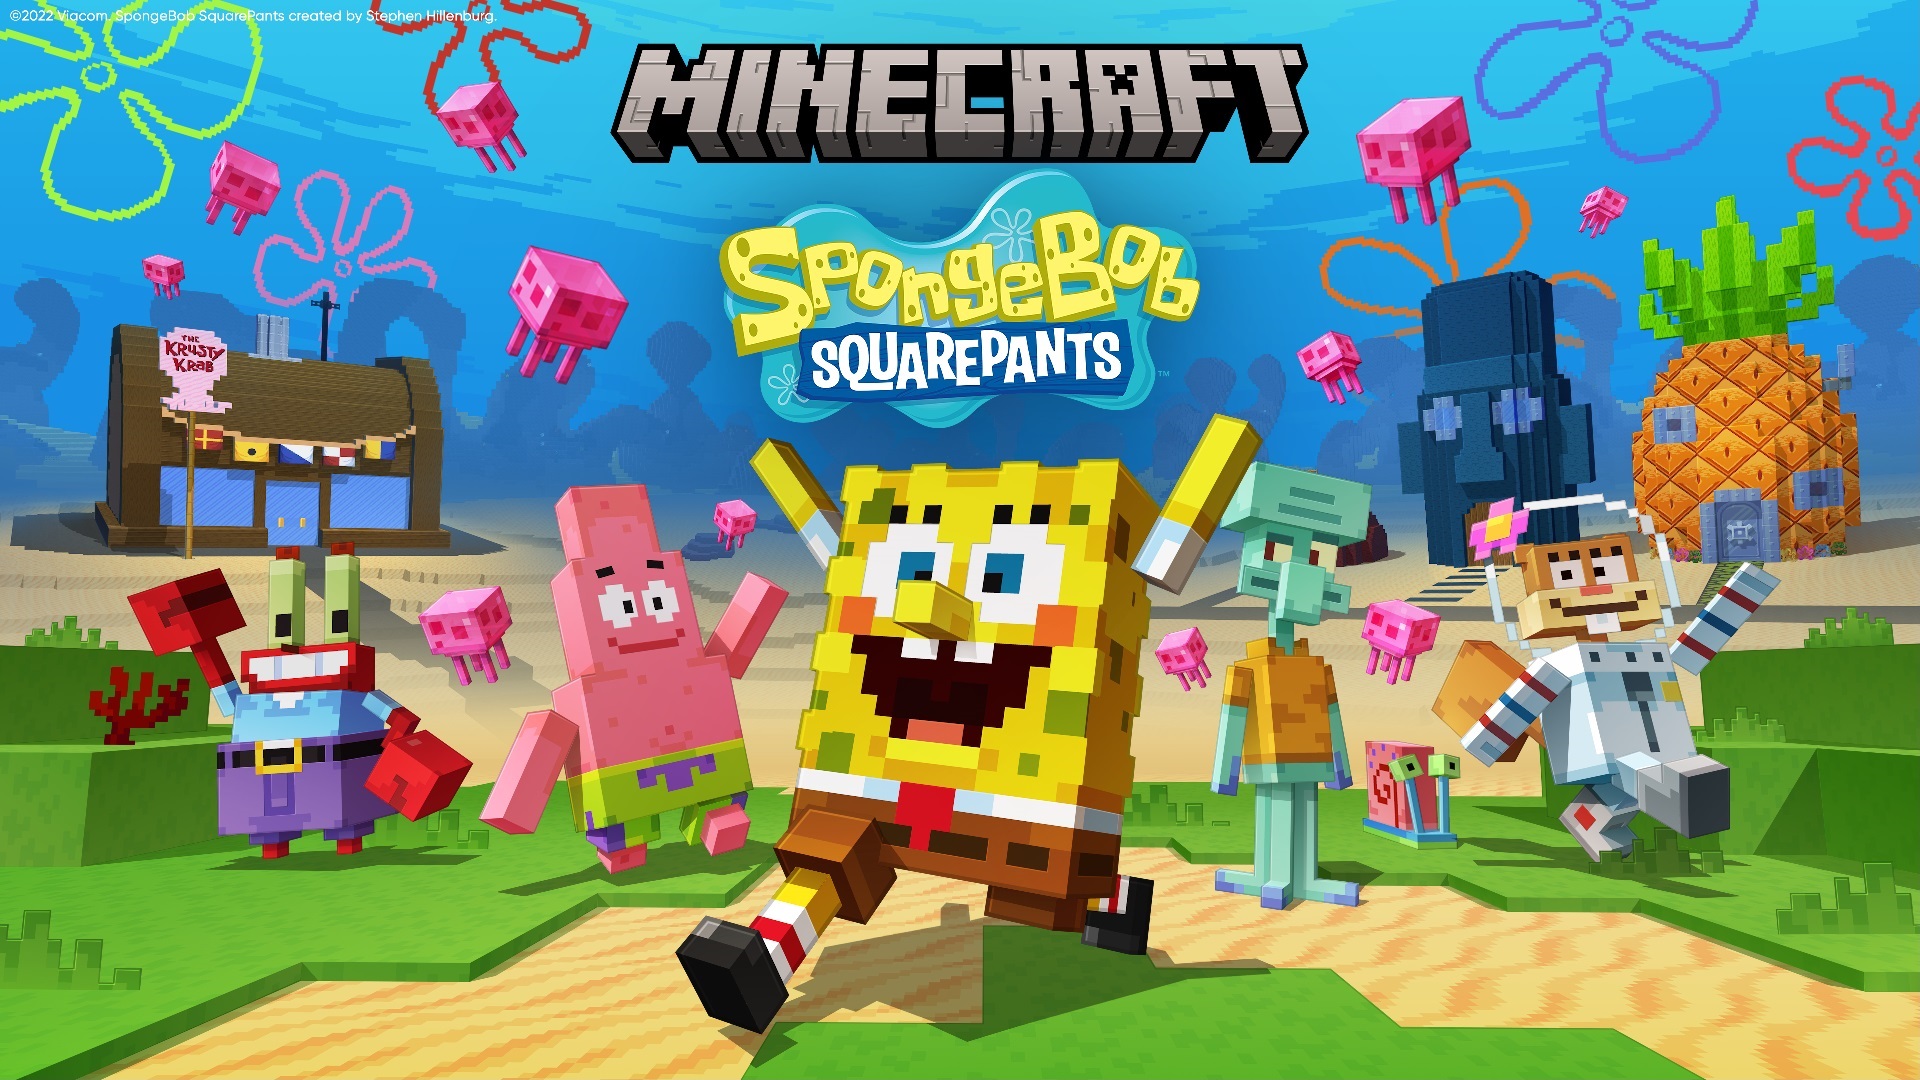 Minecraft SpongeBob SquarePants/Minecraft/Nintendo Switch/Nintendo